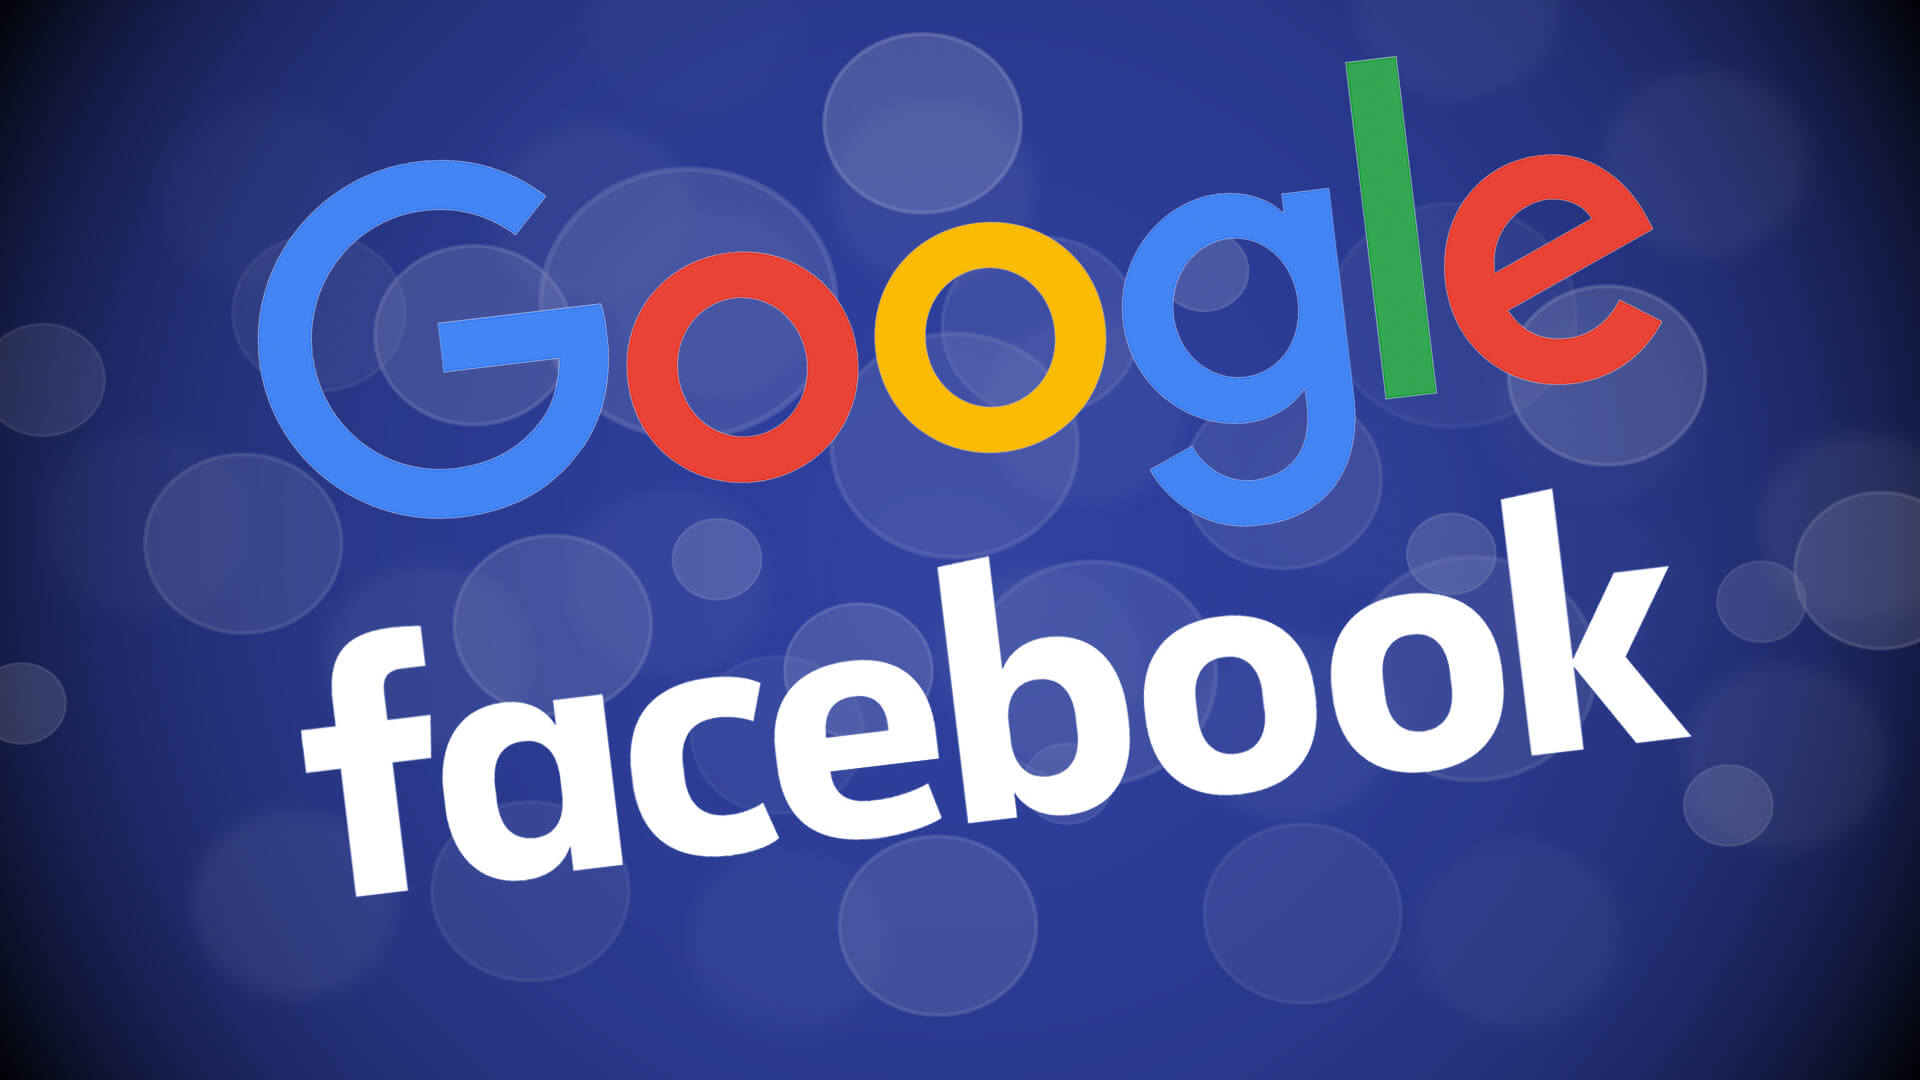 Google and Facebook Logos